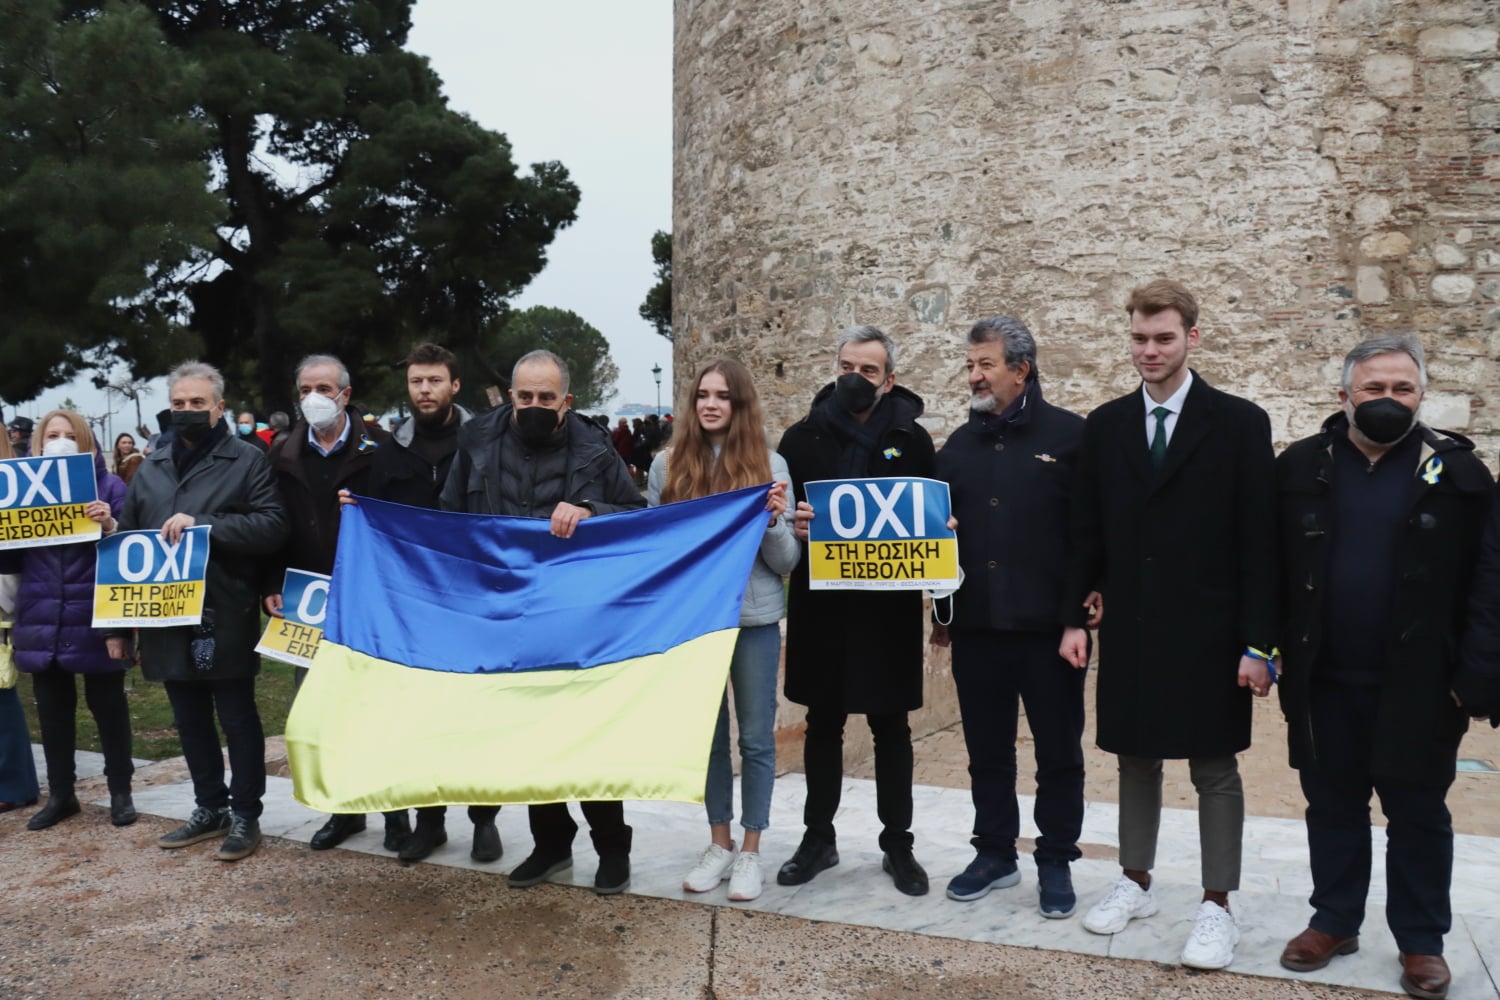 O Δήμος Νεάπολης-Συκεών δίπλα στην Ουκρανία